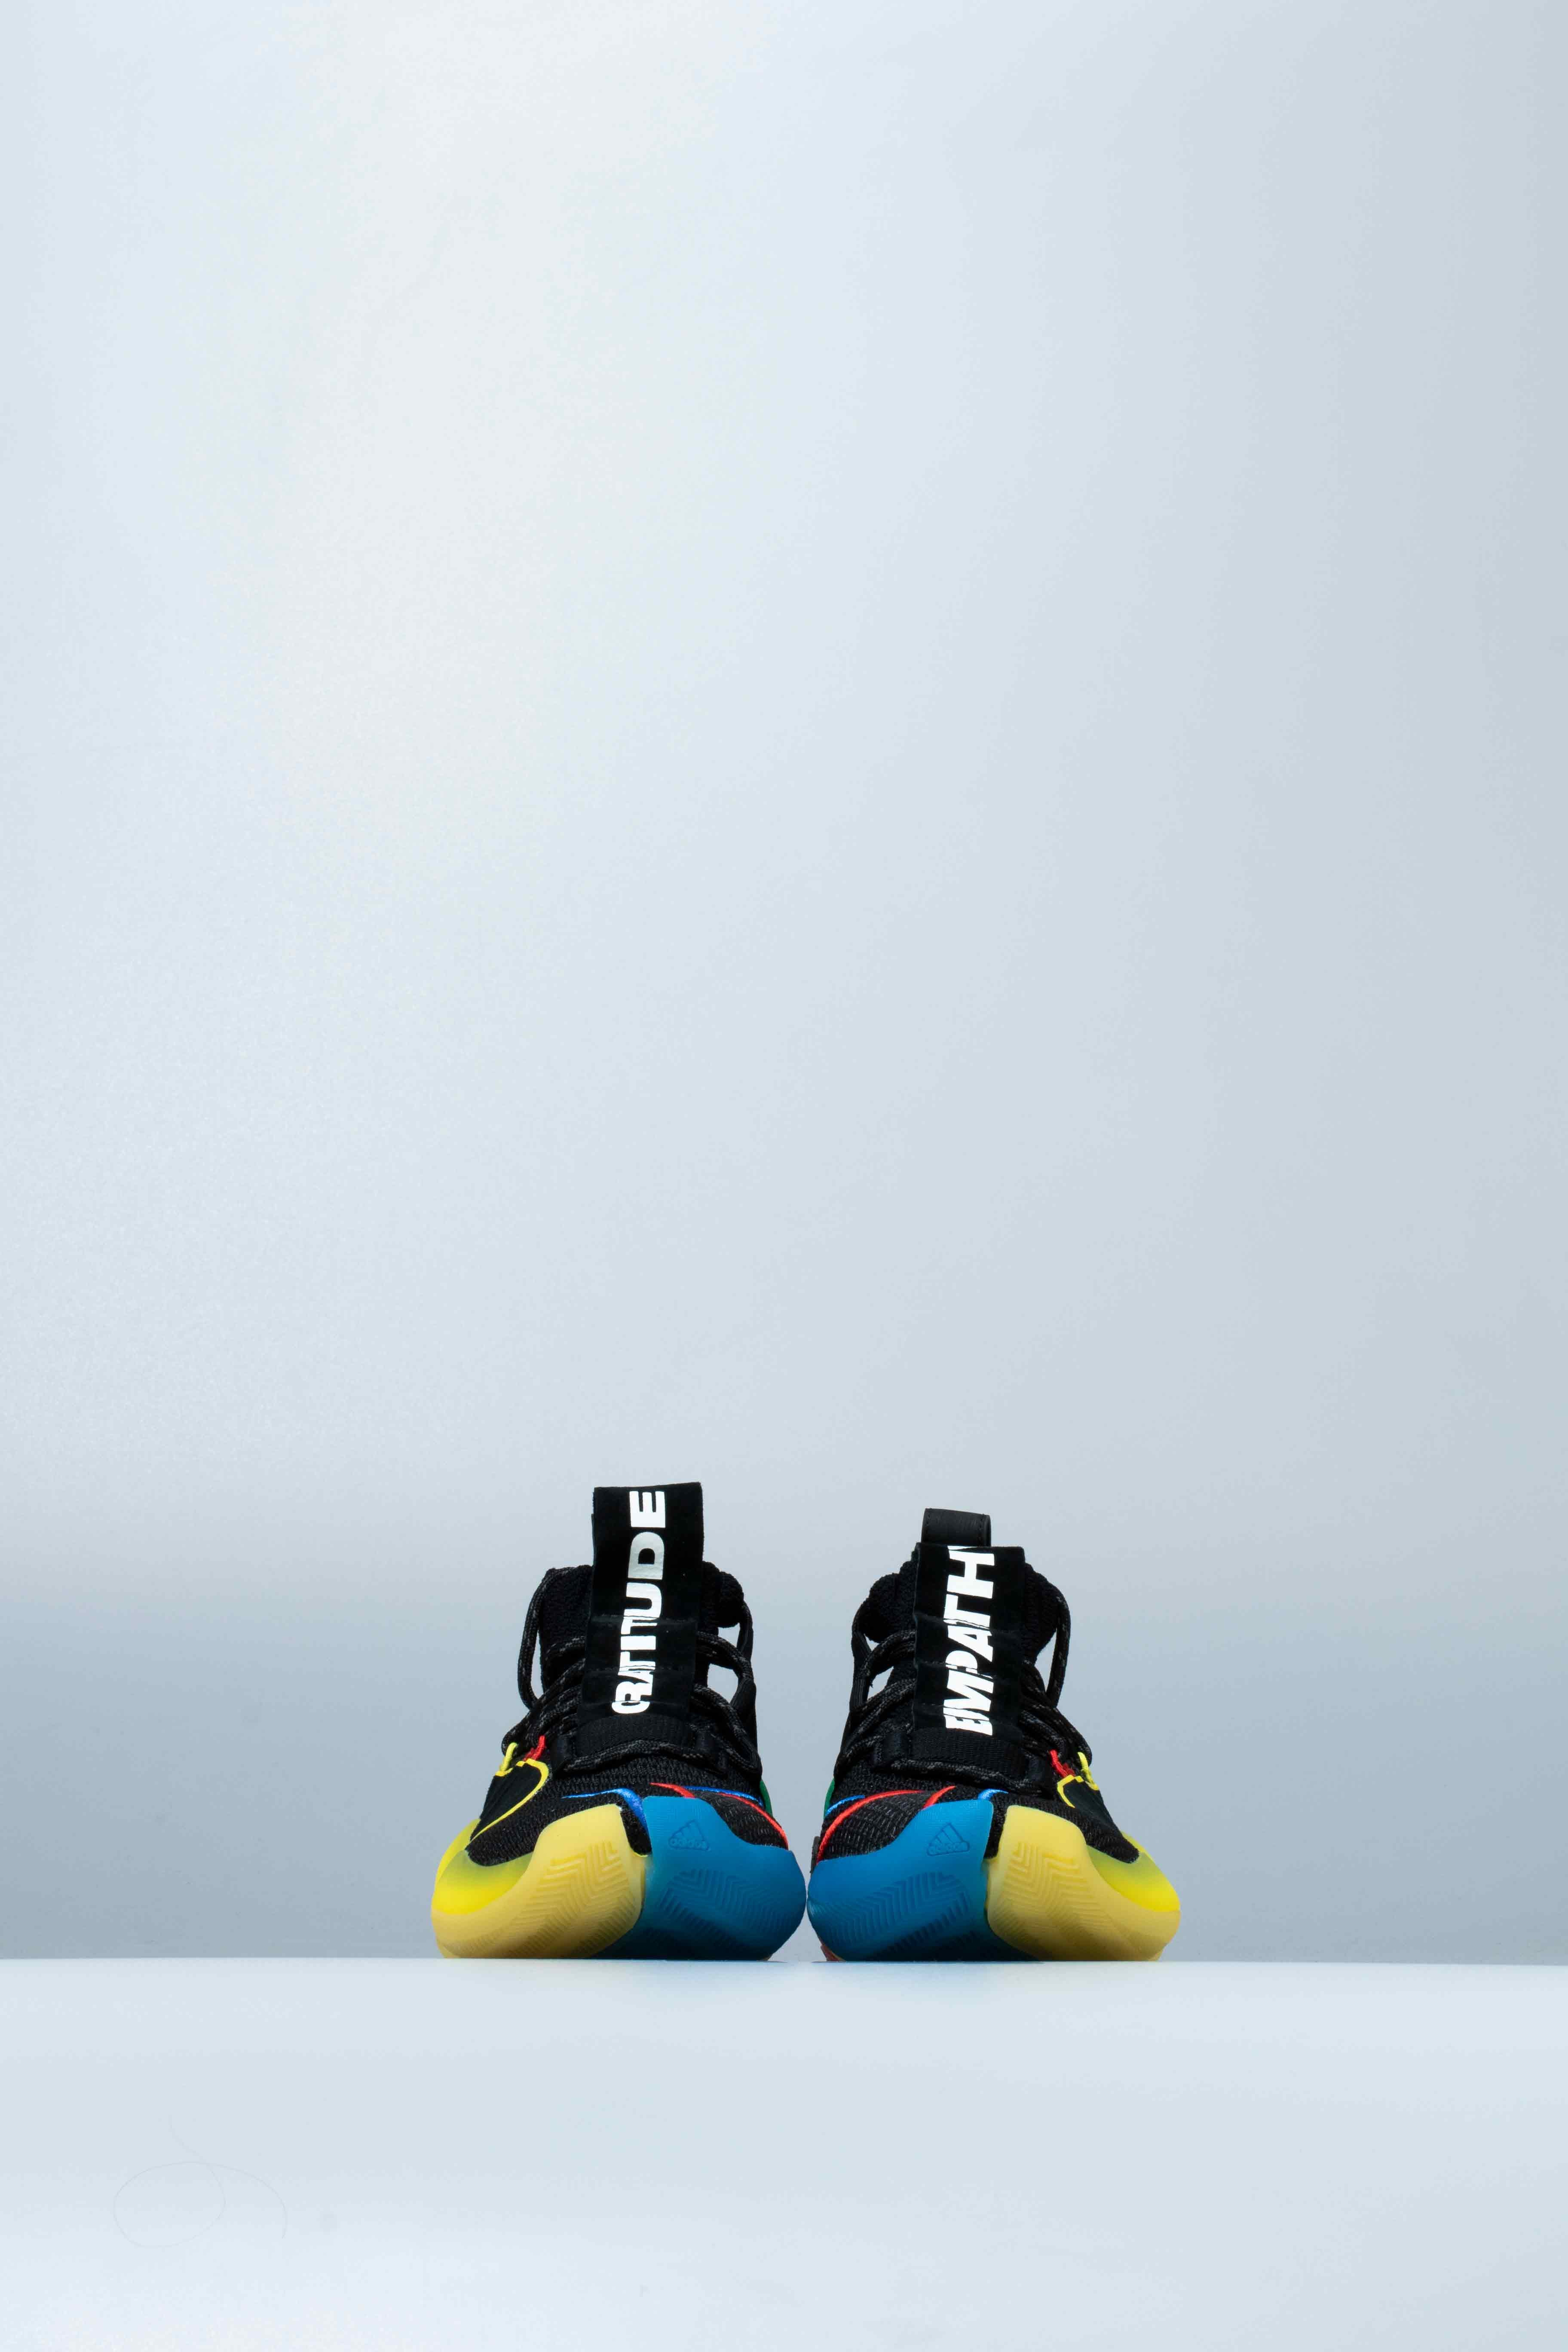 Men's shoes adidas x Pharrell Williams Crazy BYW Gratitude + Empathy  Black/ Multicolor